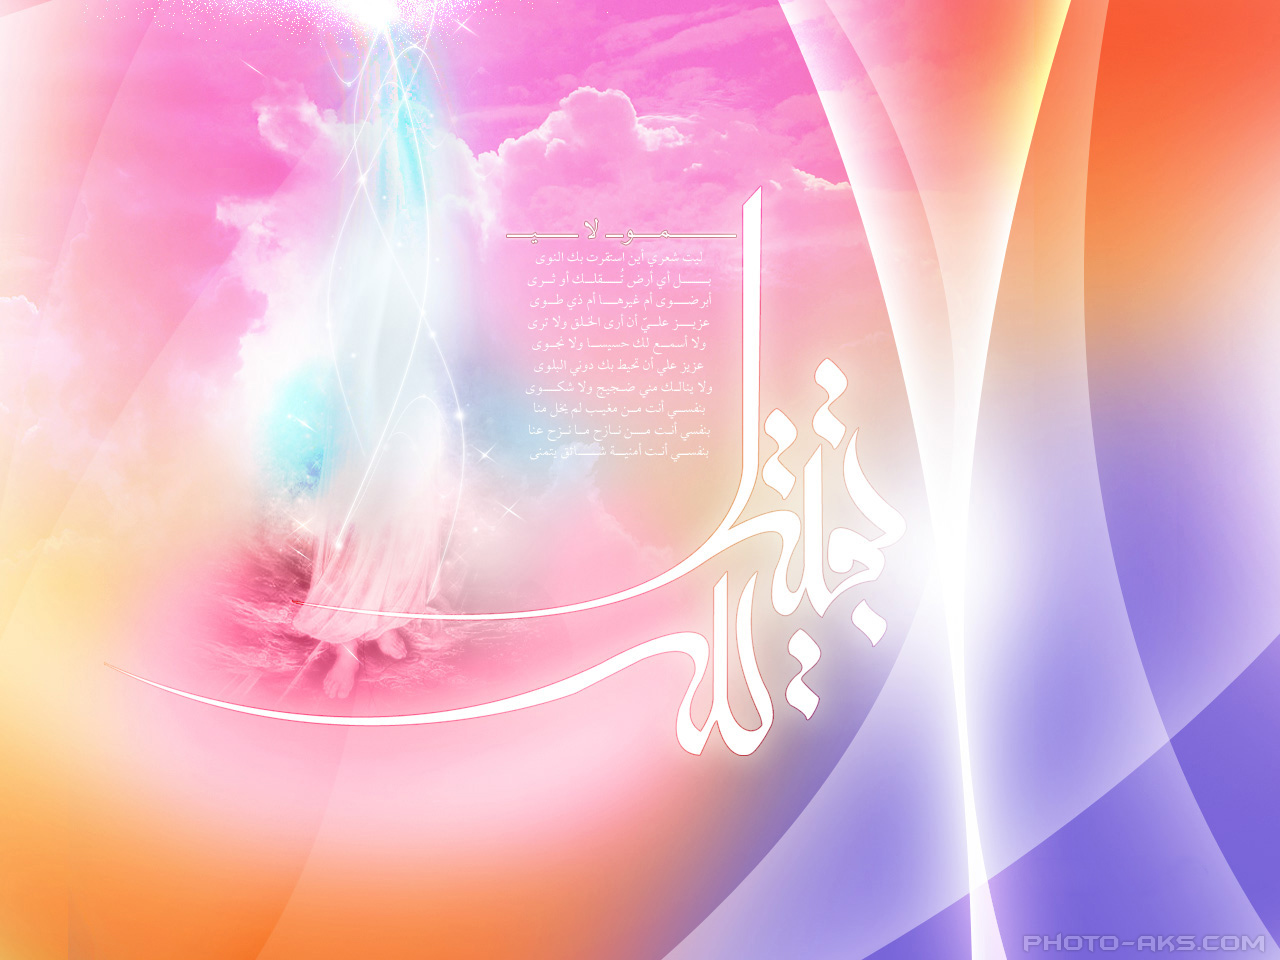 http://pic.photo-aks.com/photo/images/religious/mahdi/large/bagiat_allah.jpg